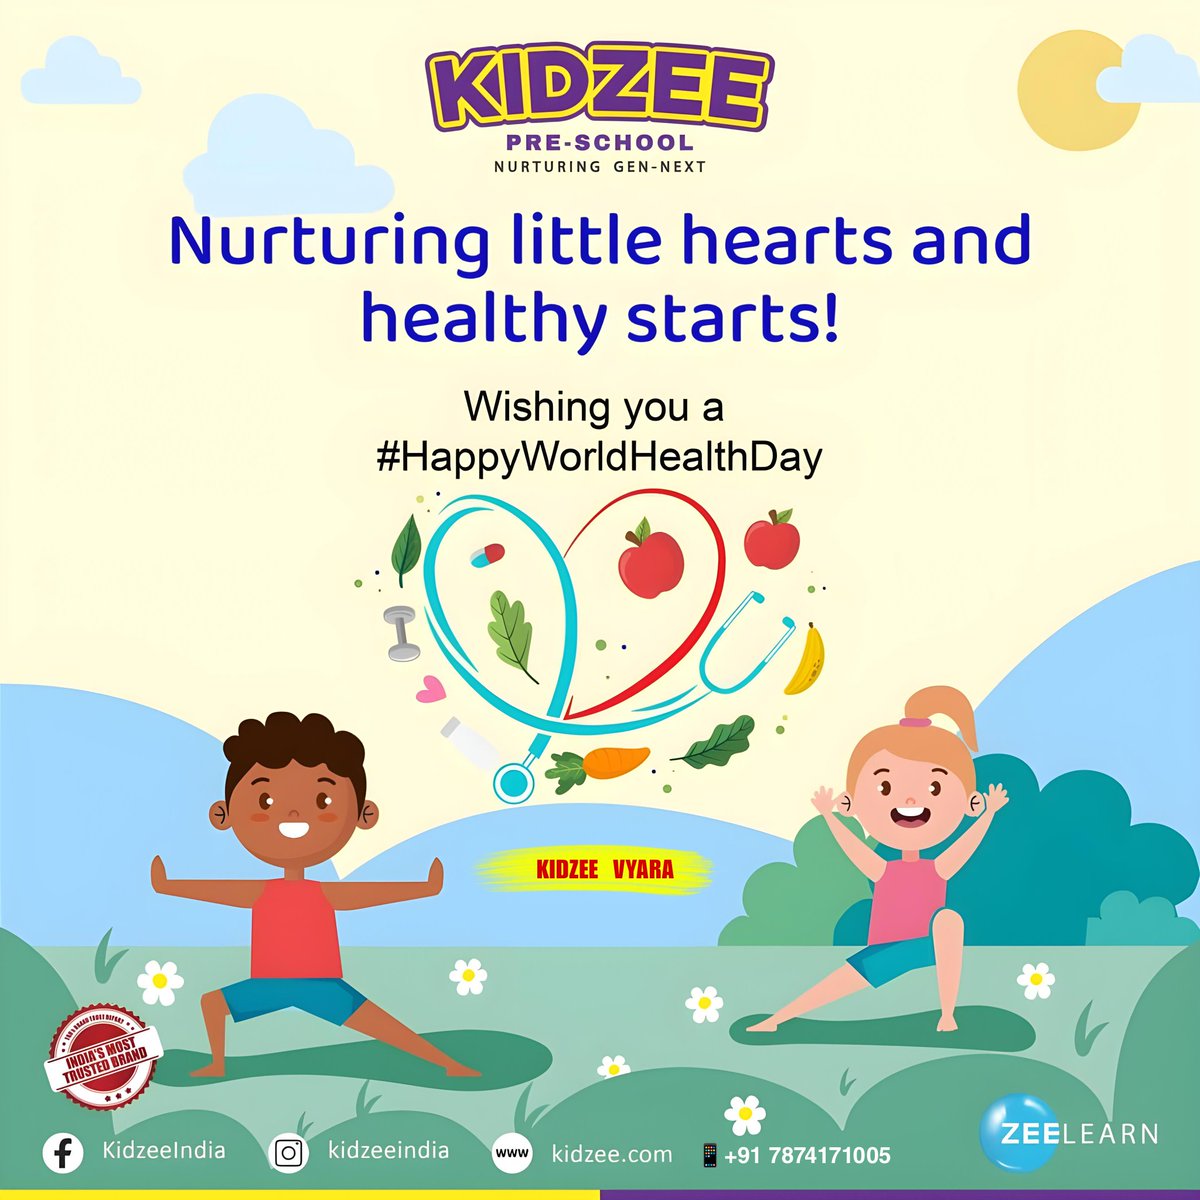 Here's to teaching healthy habits that last a lifetime! Happy World Health Day.

#KidzeePreschoolVyara #Kids #EarlyChildhoodEducation #FunLearning #HappyWorldHealthDay #HealthDay